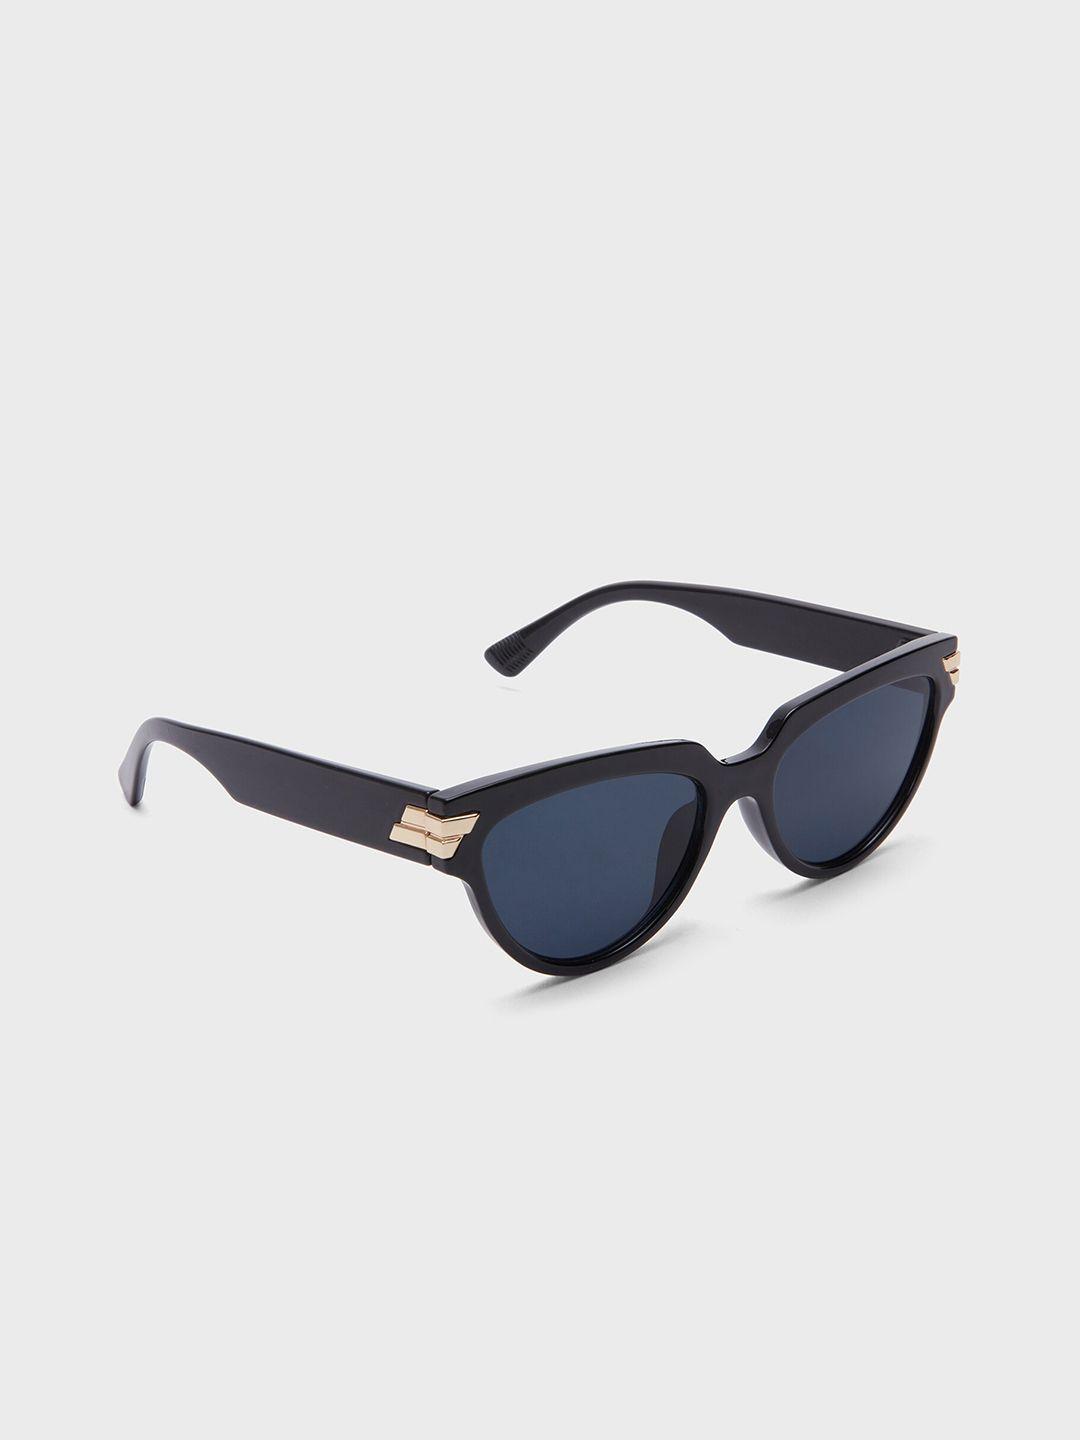 20dresses women cateye essential acrylic sunglasses with regular lens sg010755